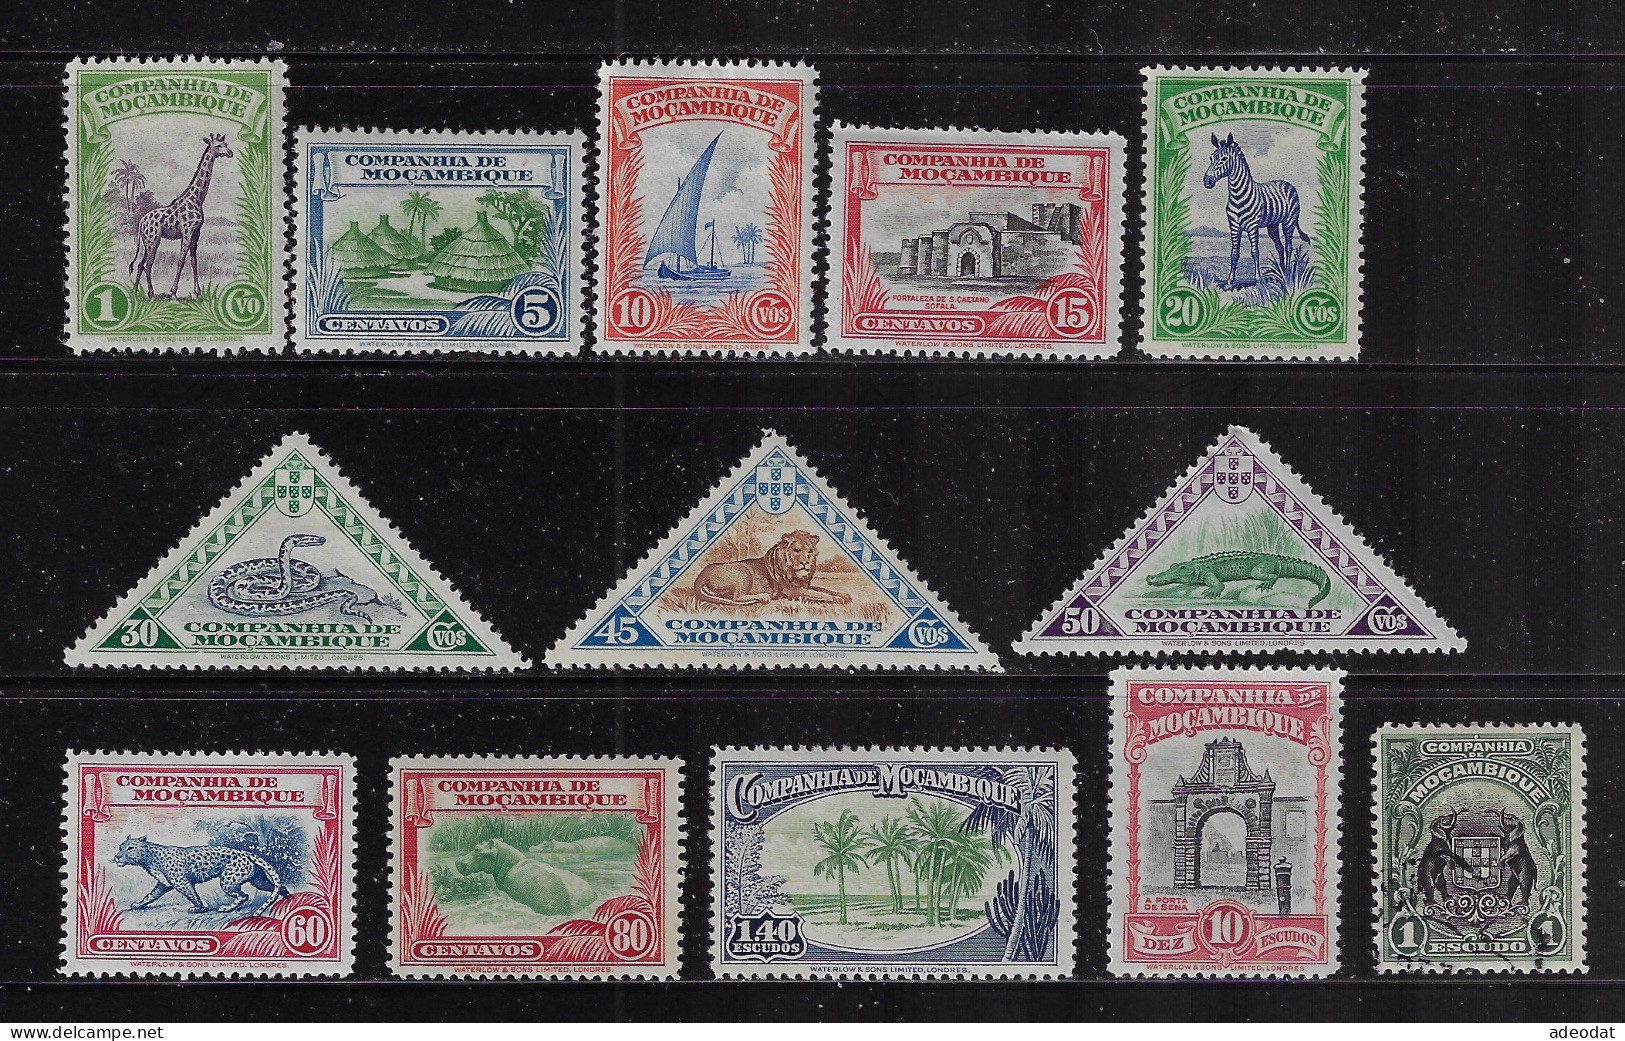 MOZAMBIQUE COMPANY 1937  SCOTT#175-180,182-184,186,188,189,192  MH CV $4.20 - Mozambique